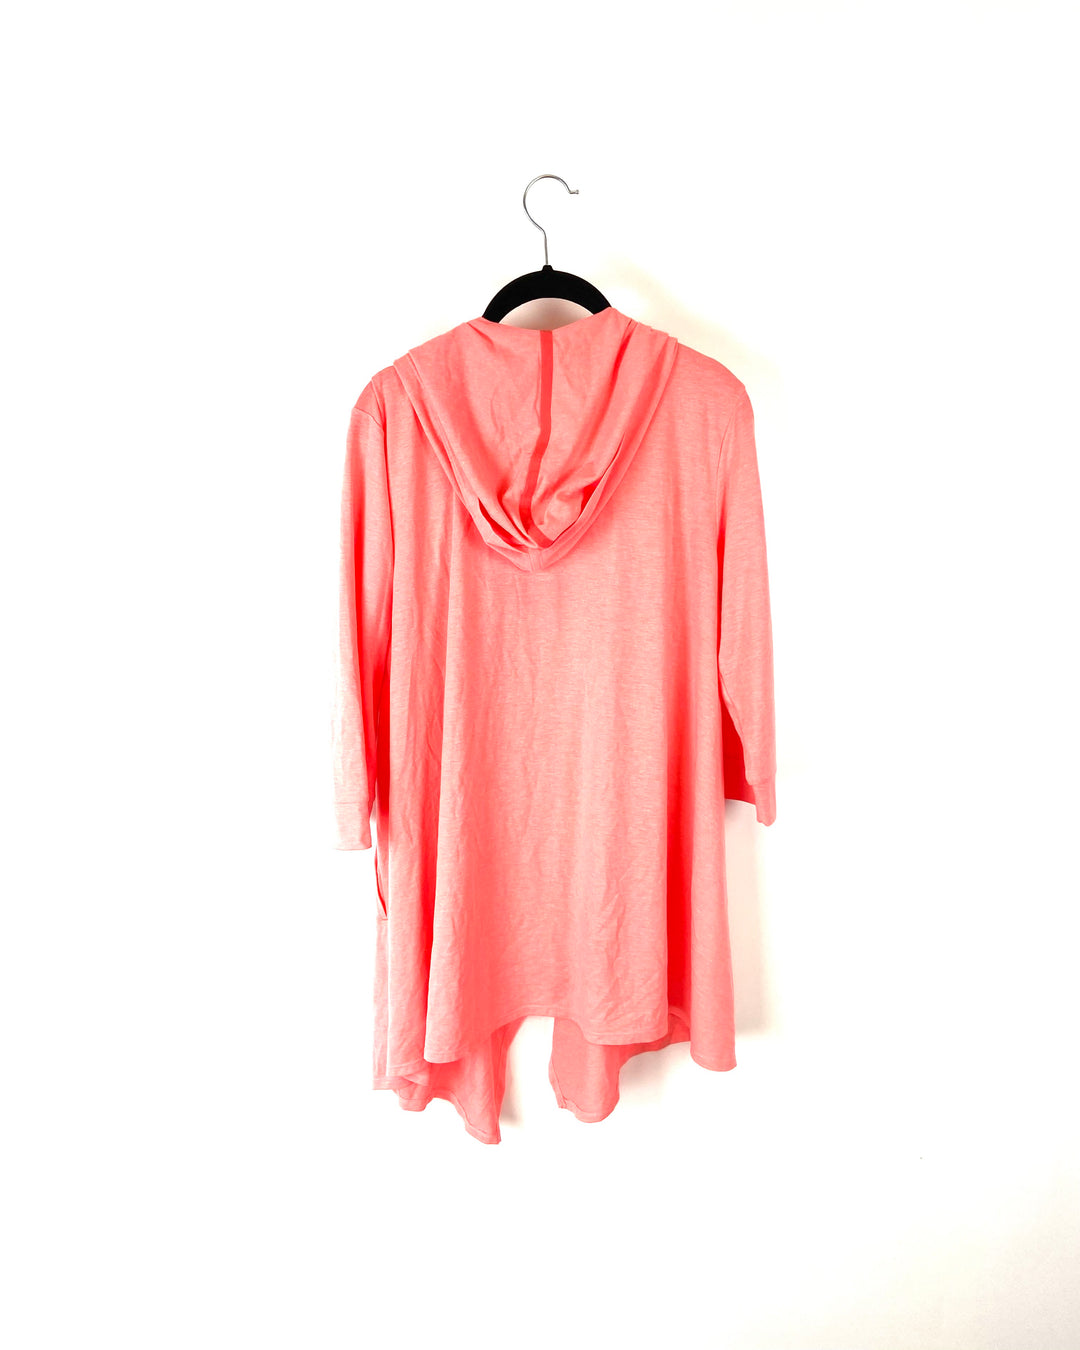 Pink 3/4 Sleeve Hooded Cardigan - Small/Medium